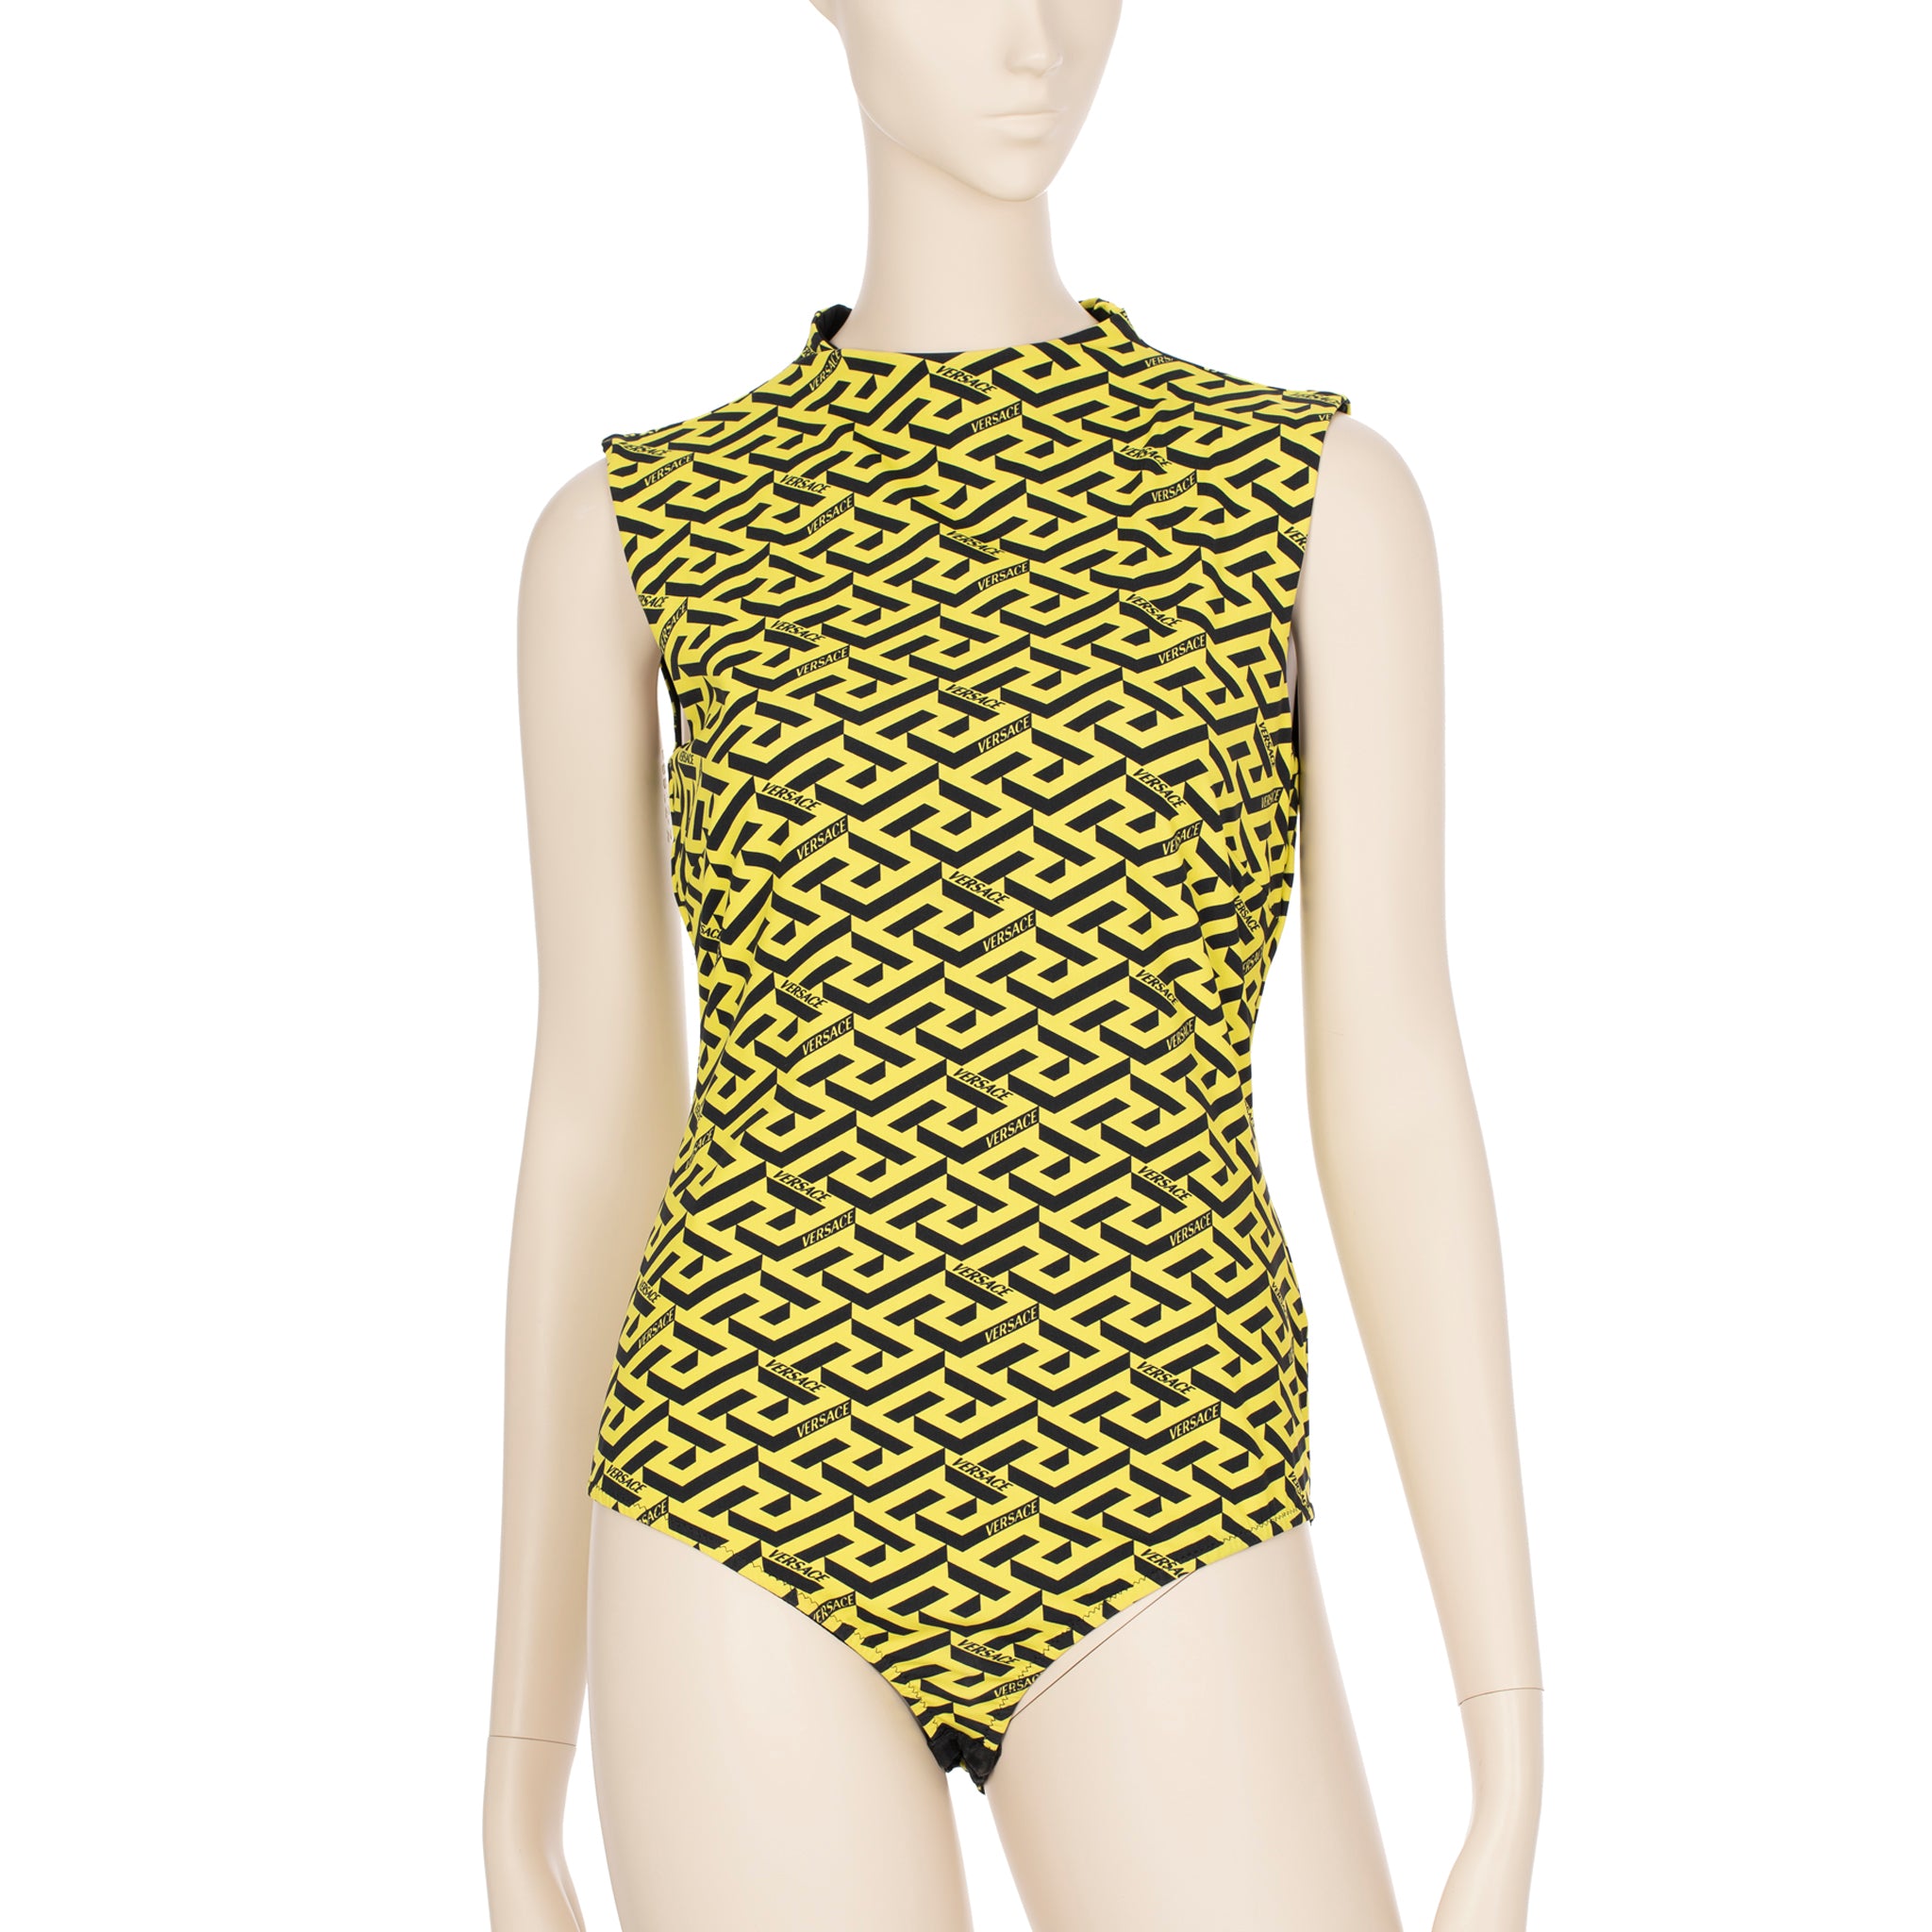 Versace La Greca Monogram Neon Yellow Bodysuit 38 IT